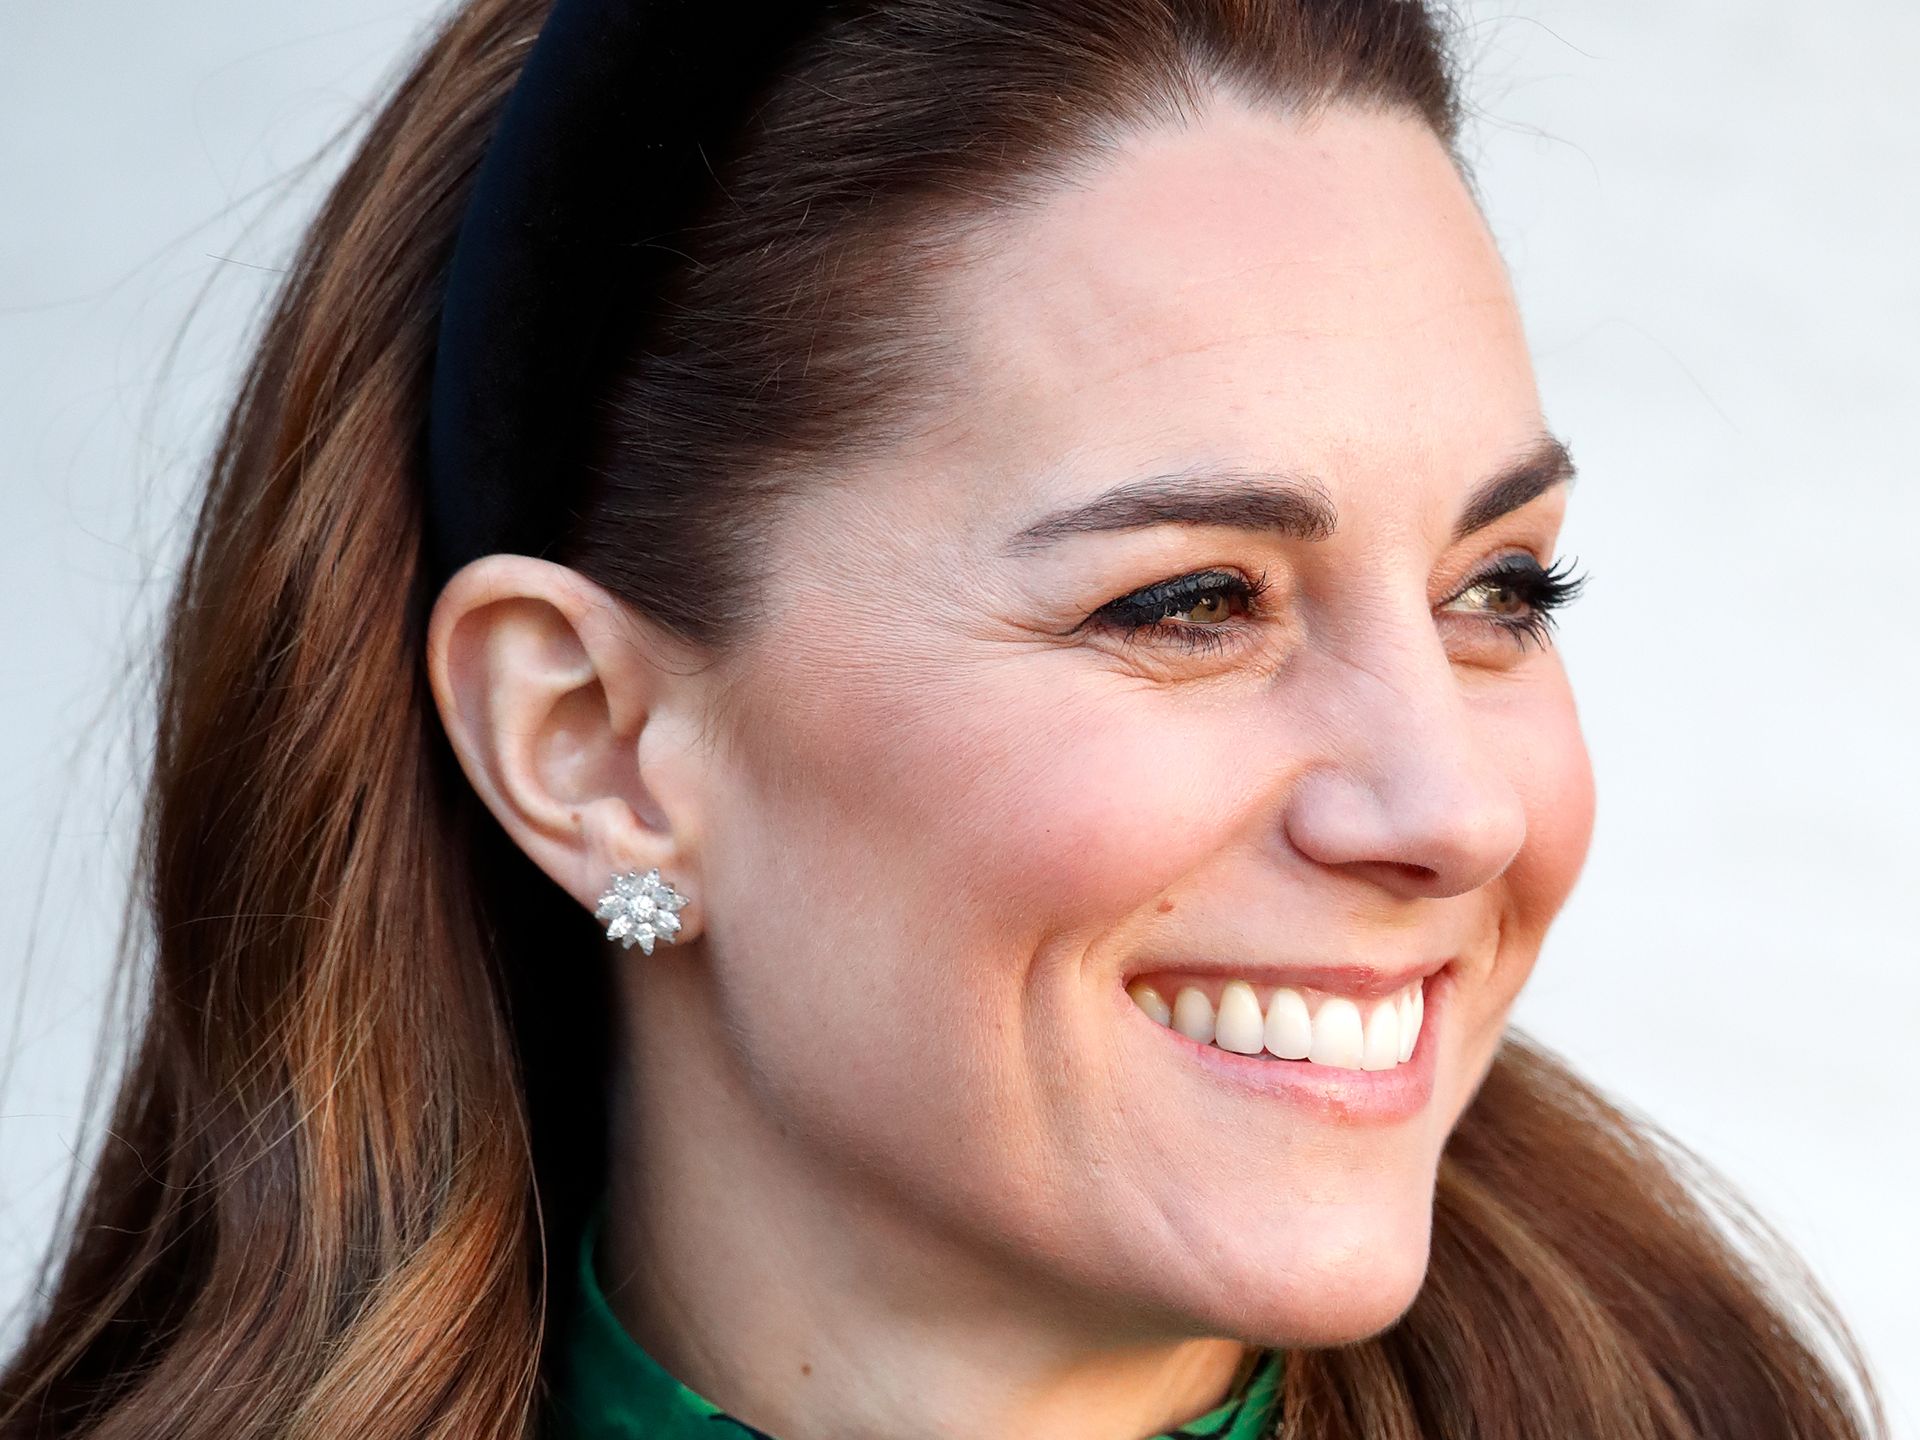 KIKI Grace White Topaz Stud Earrings  Kate Middleton Earrings  Kates  Closet